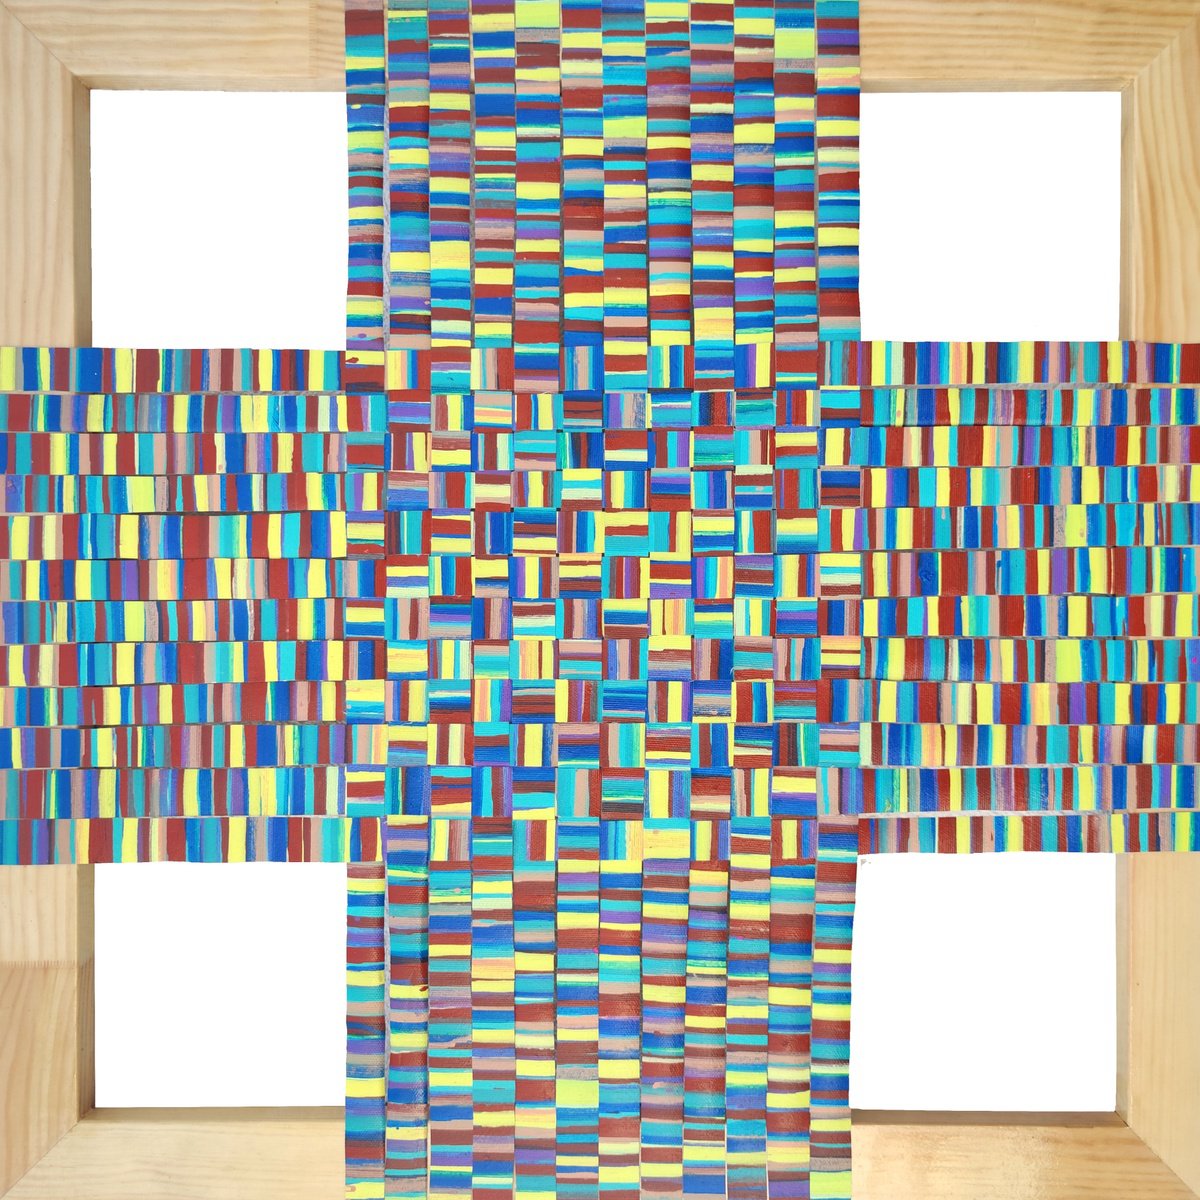 Tiles #1 by Carla Sa Fernandes